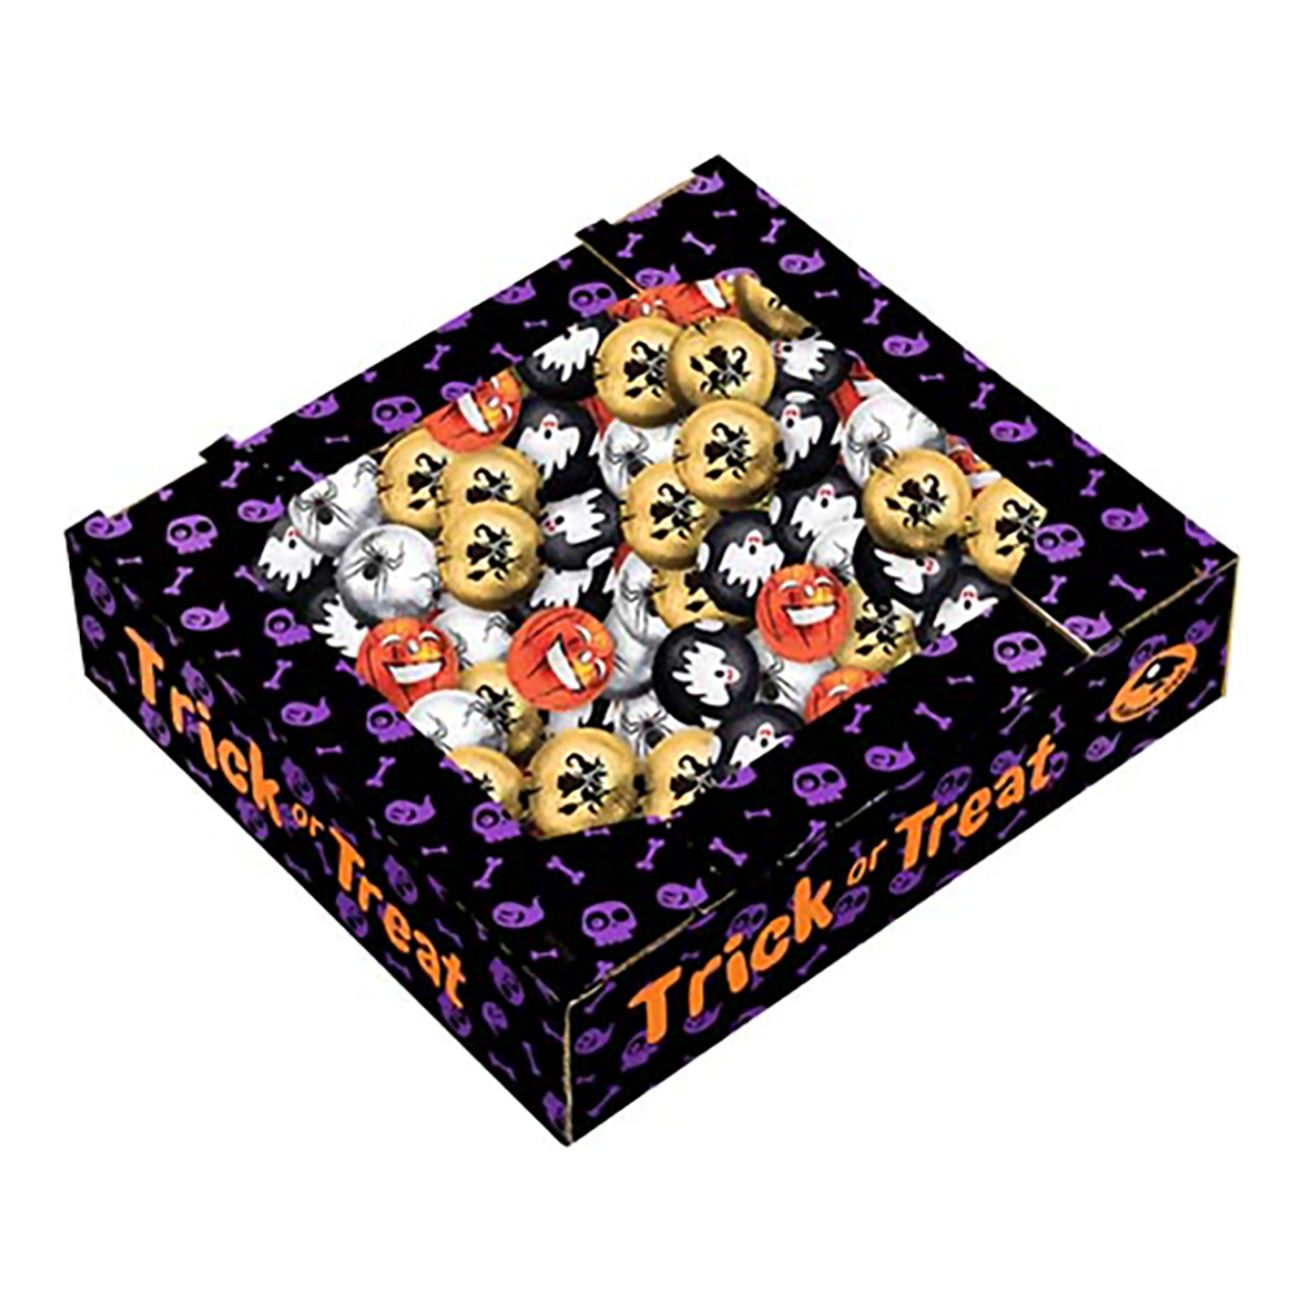 trick-or-treat-chokladbox-77233-1